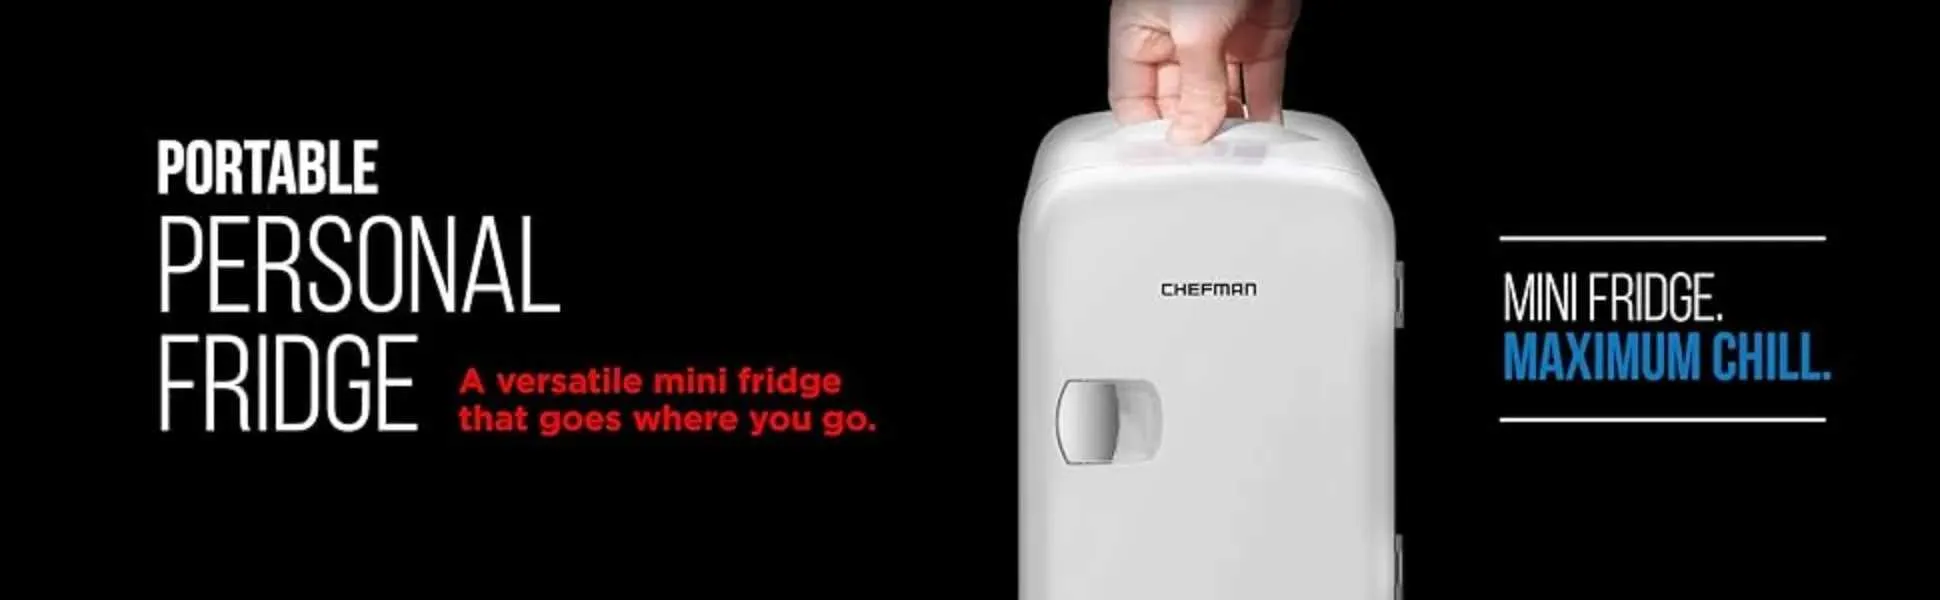 Cooler,Portable,Fridge,Personal,Compact,can fridge,Heating,Cooling,Chill,Mini Fridge,Refrigerator